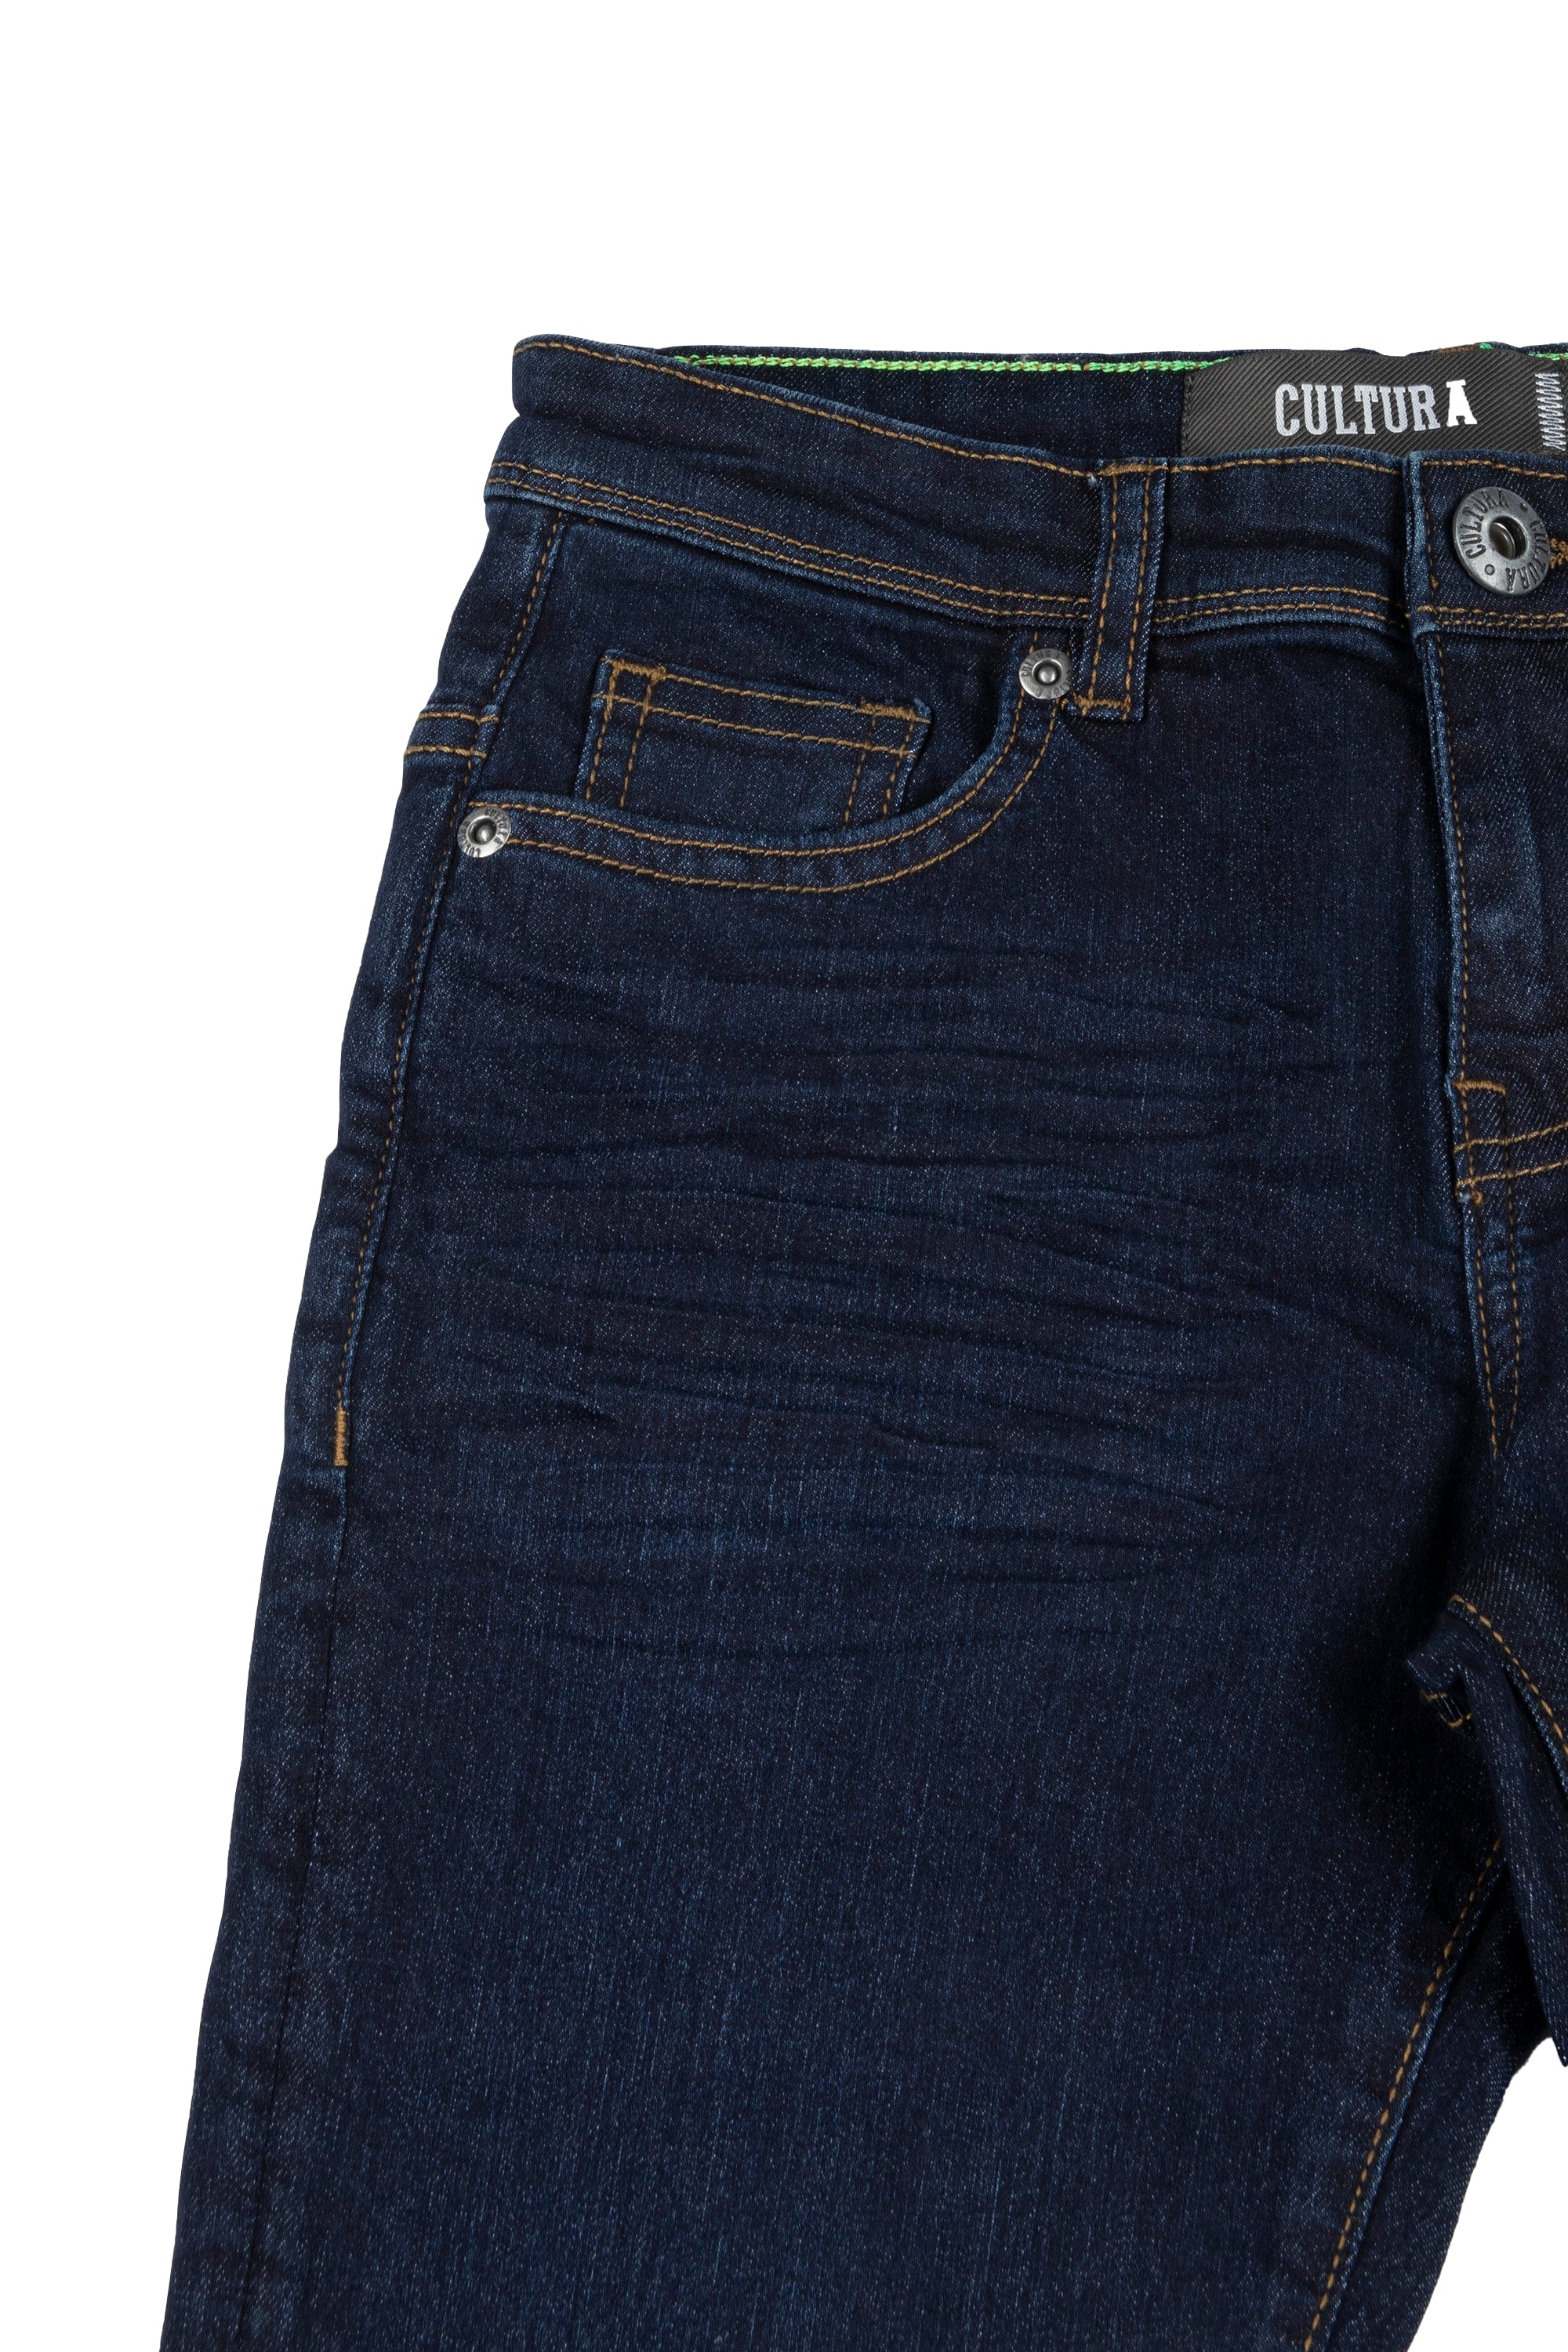 XRay Jeans Cultura Boys Slim Wash Accent Stitch Denim Pants – X-RAY JEANS